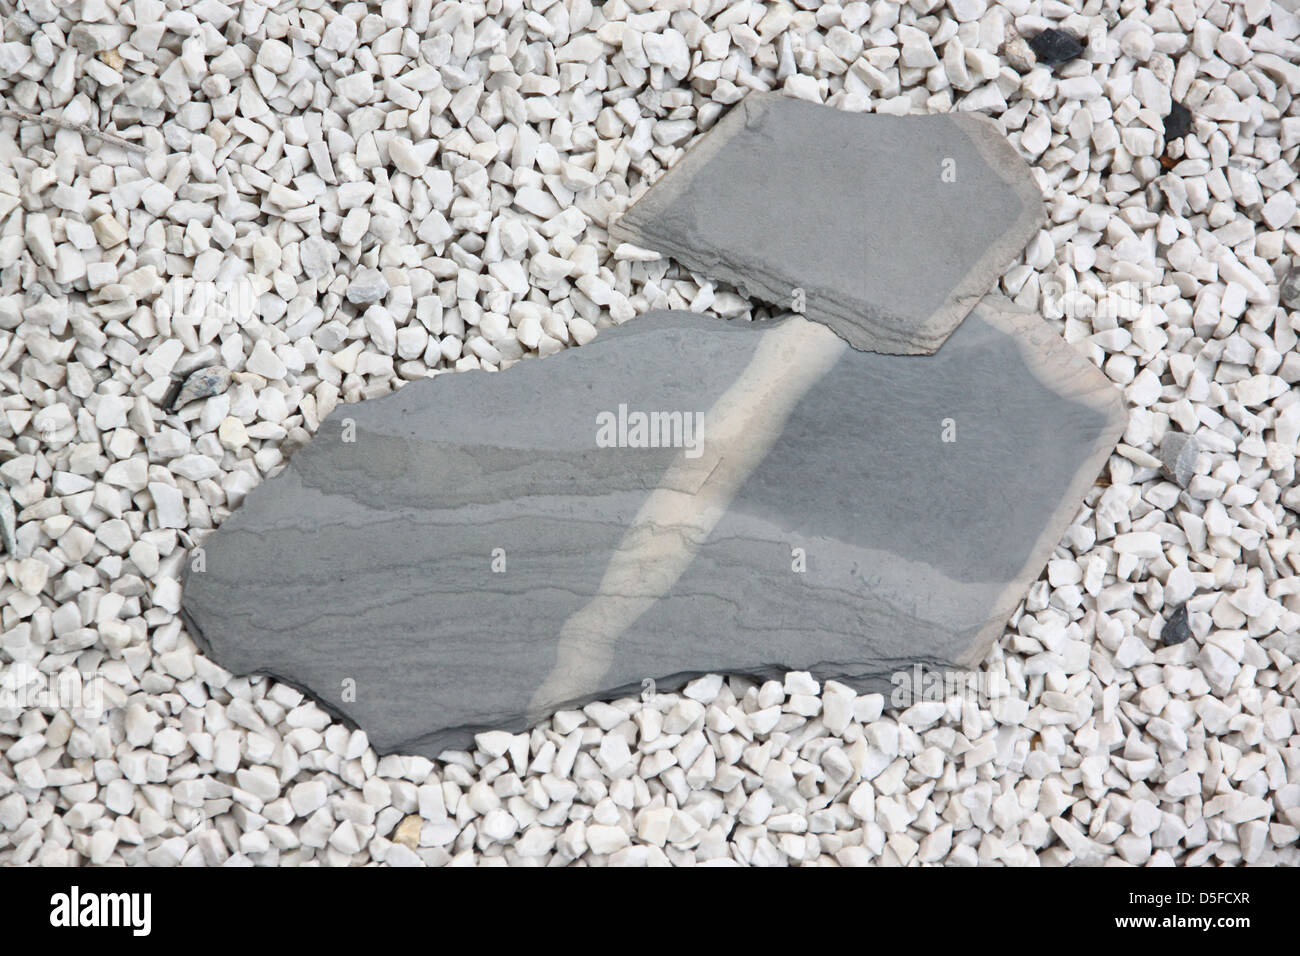 https://c8.alamy.com/comp/D5FCXR/the-large-stone-slabs-on-a-white-small-rock-D5FCXR.jpg